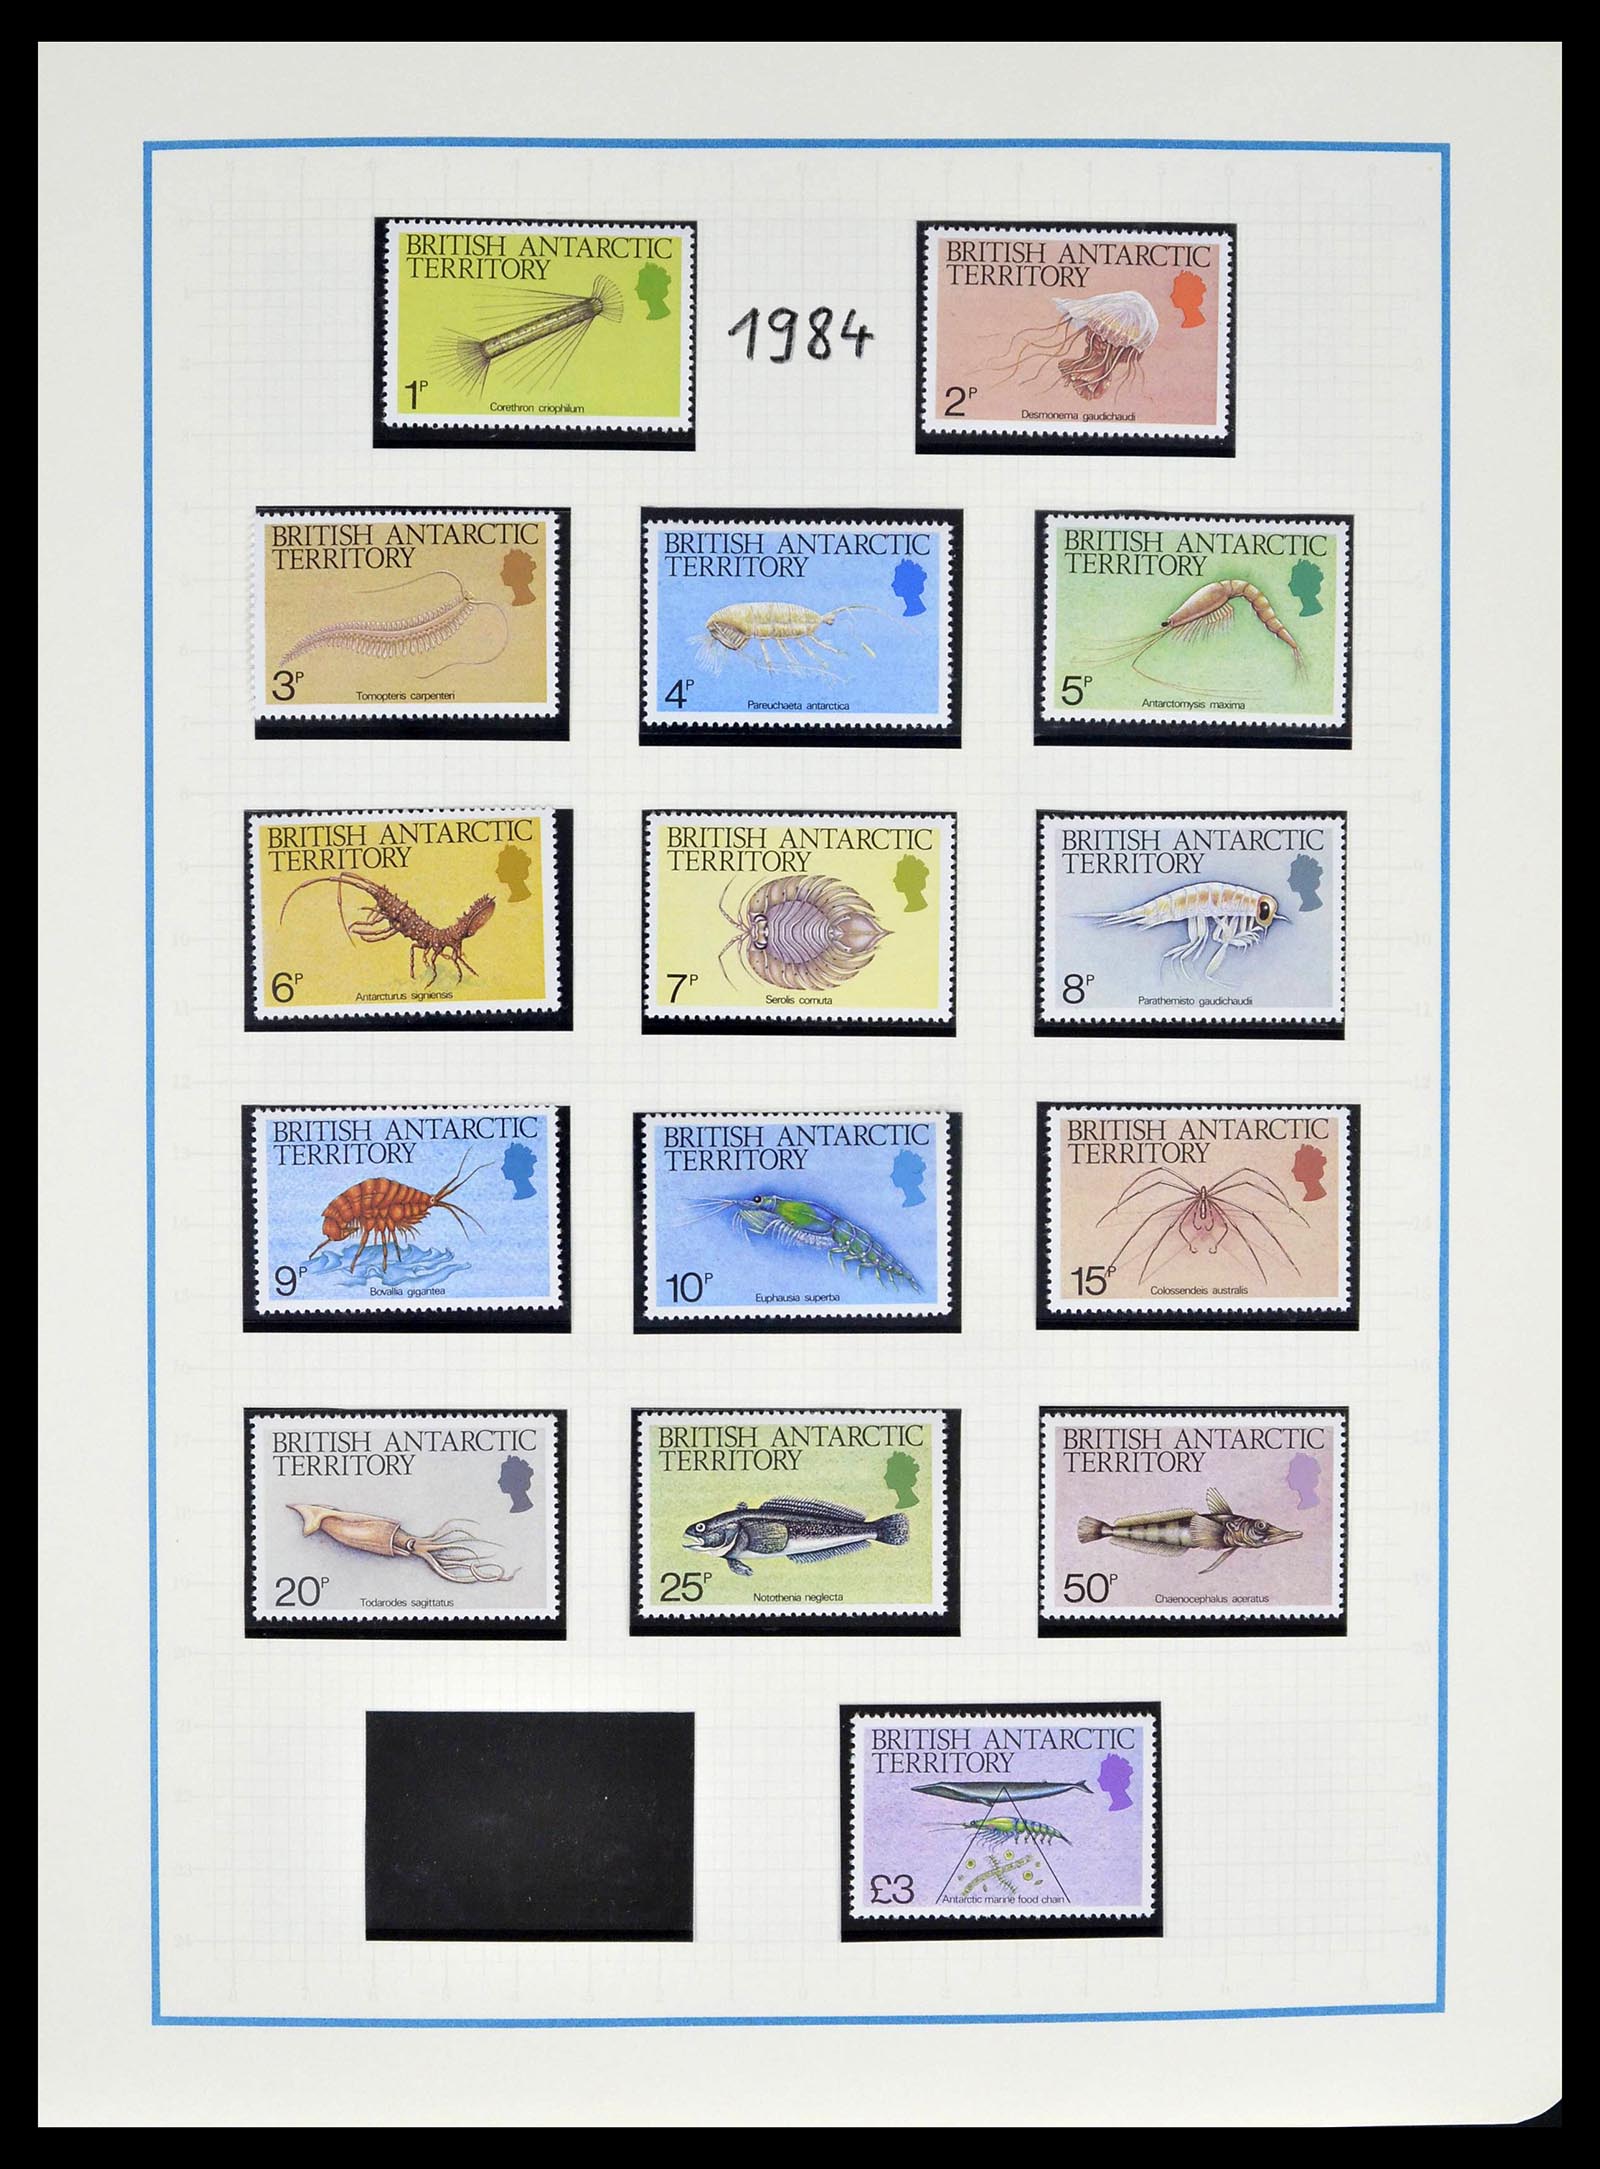 39398 0044 - Stamp collection 39398 Antarctica 1908-1984.